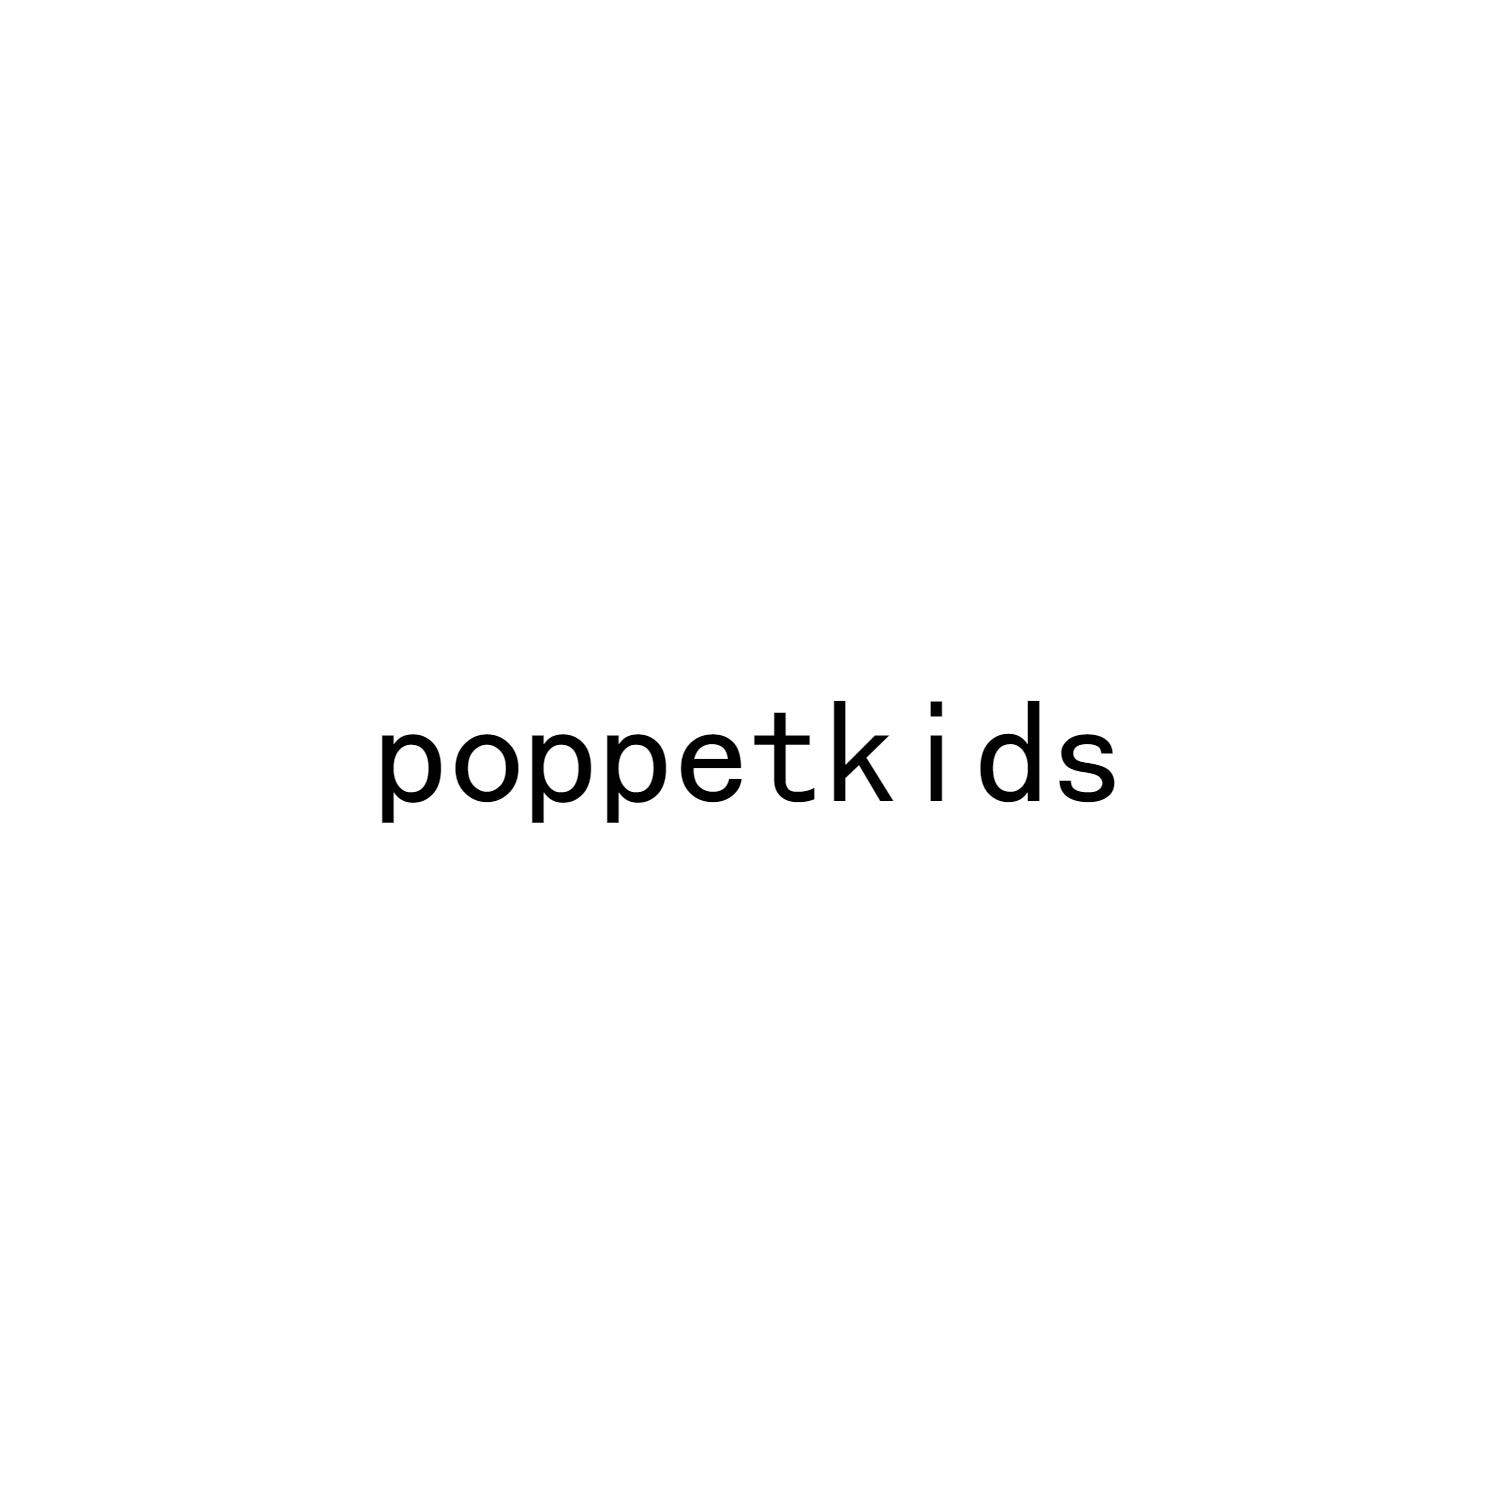 POPPETKIDS商标转让